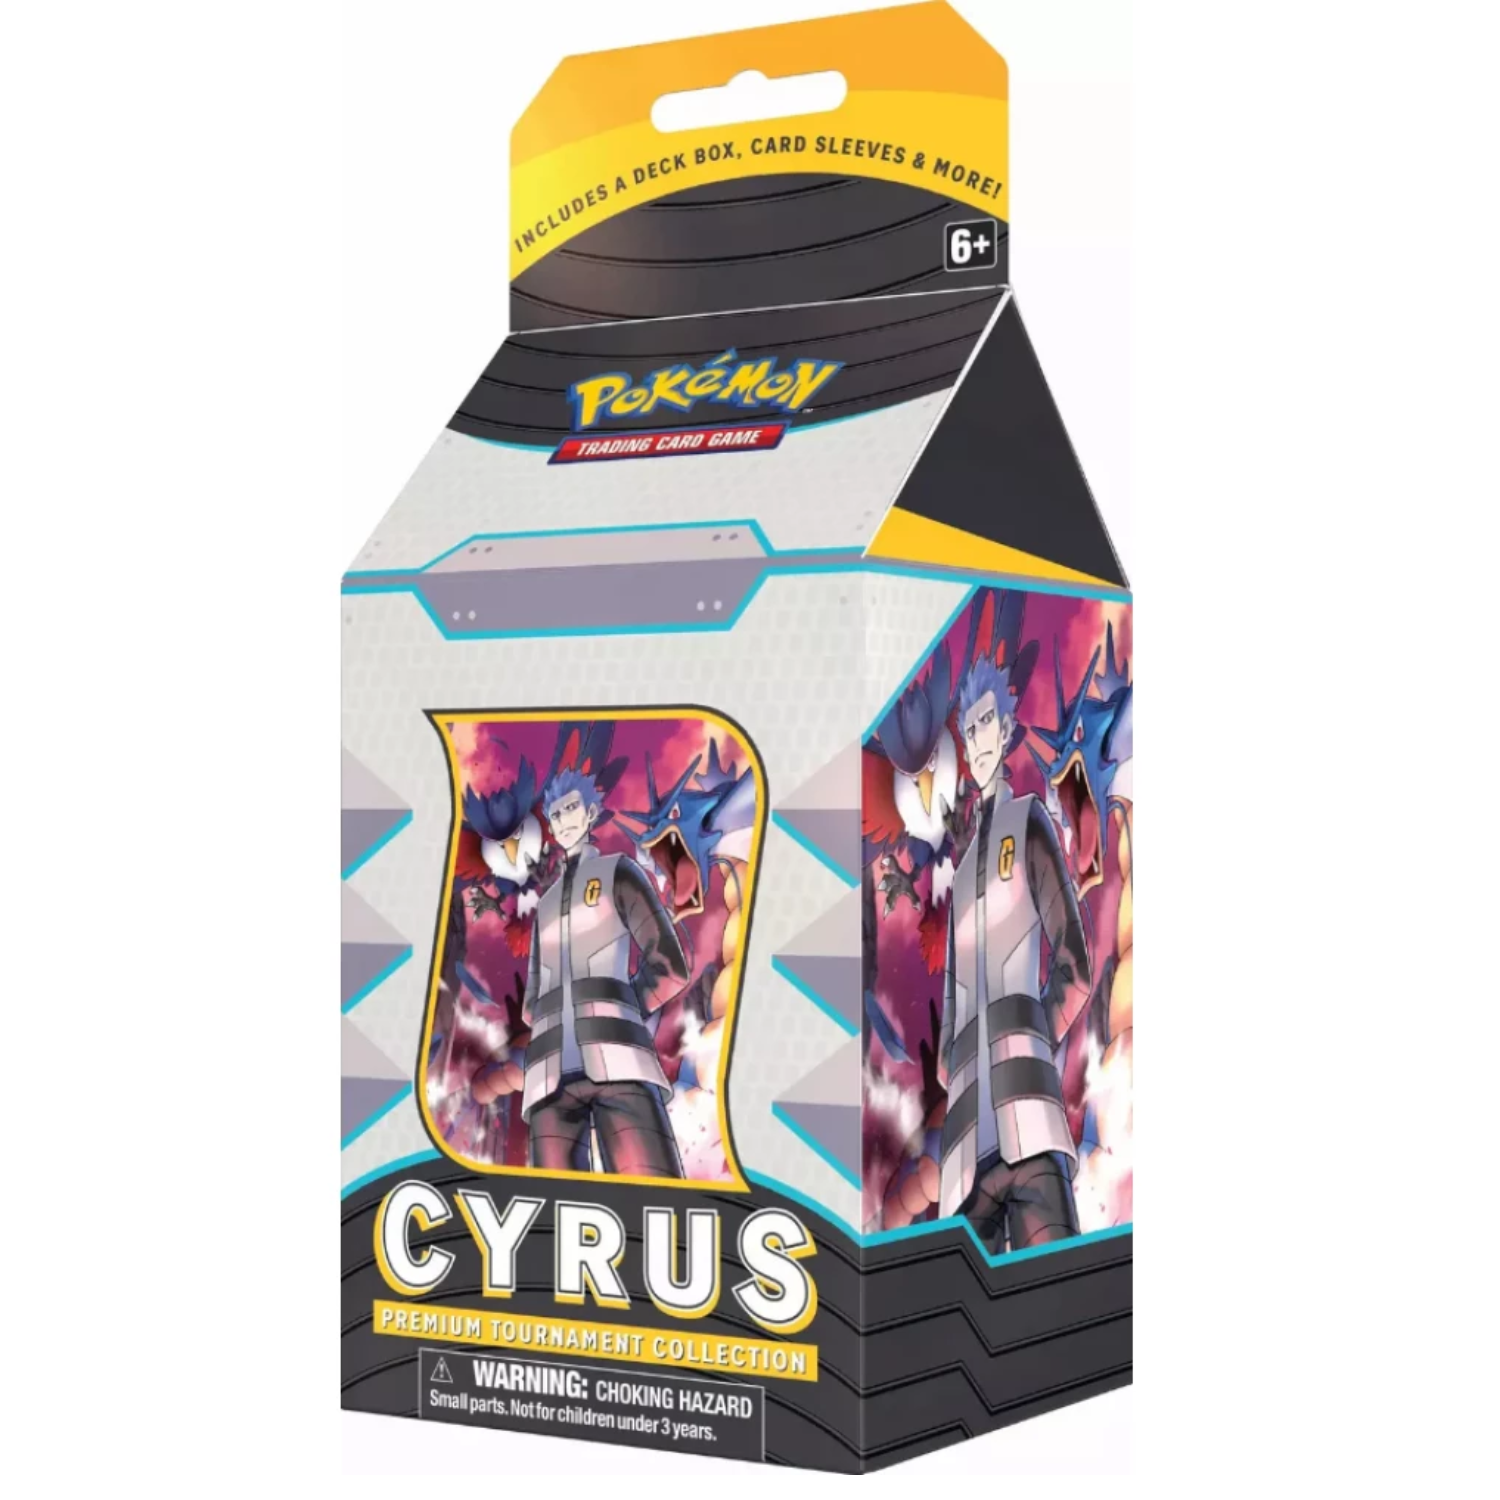 Pokémon TCG: Cyrus Premium Tournament Collection - Pieza Inglés